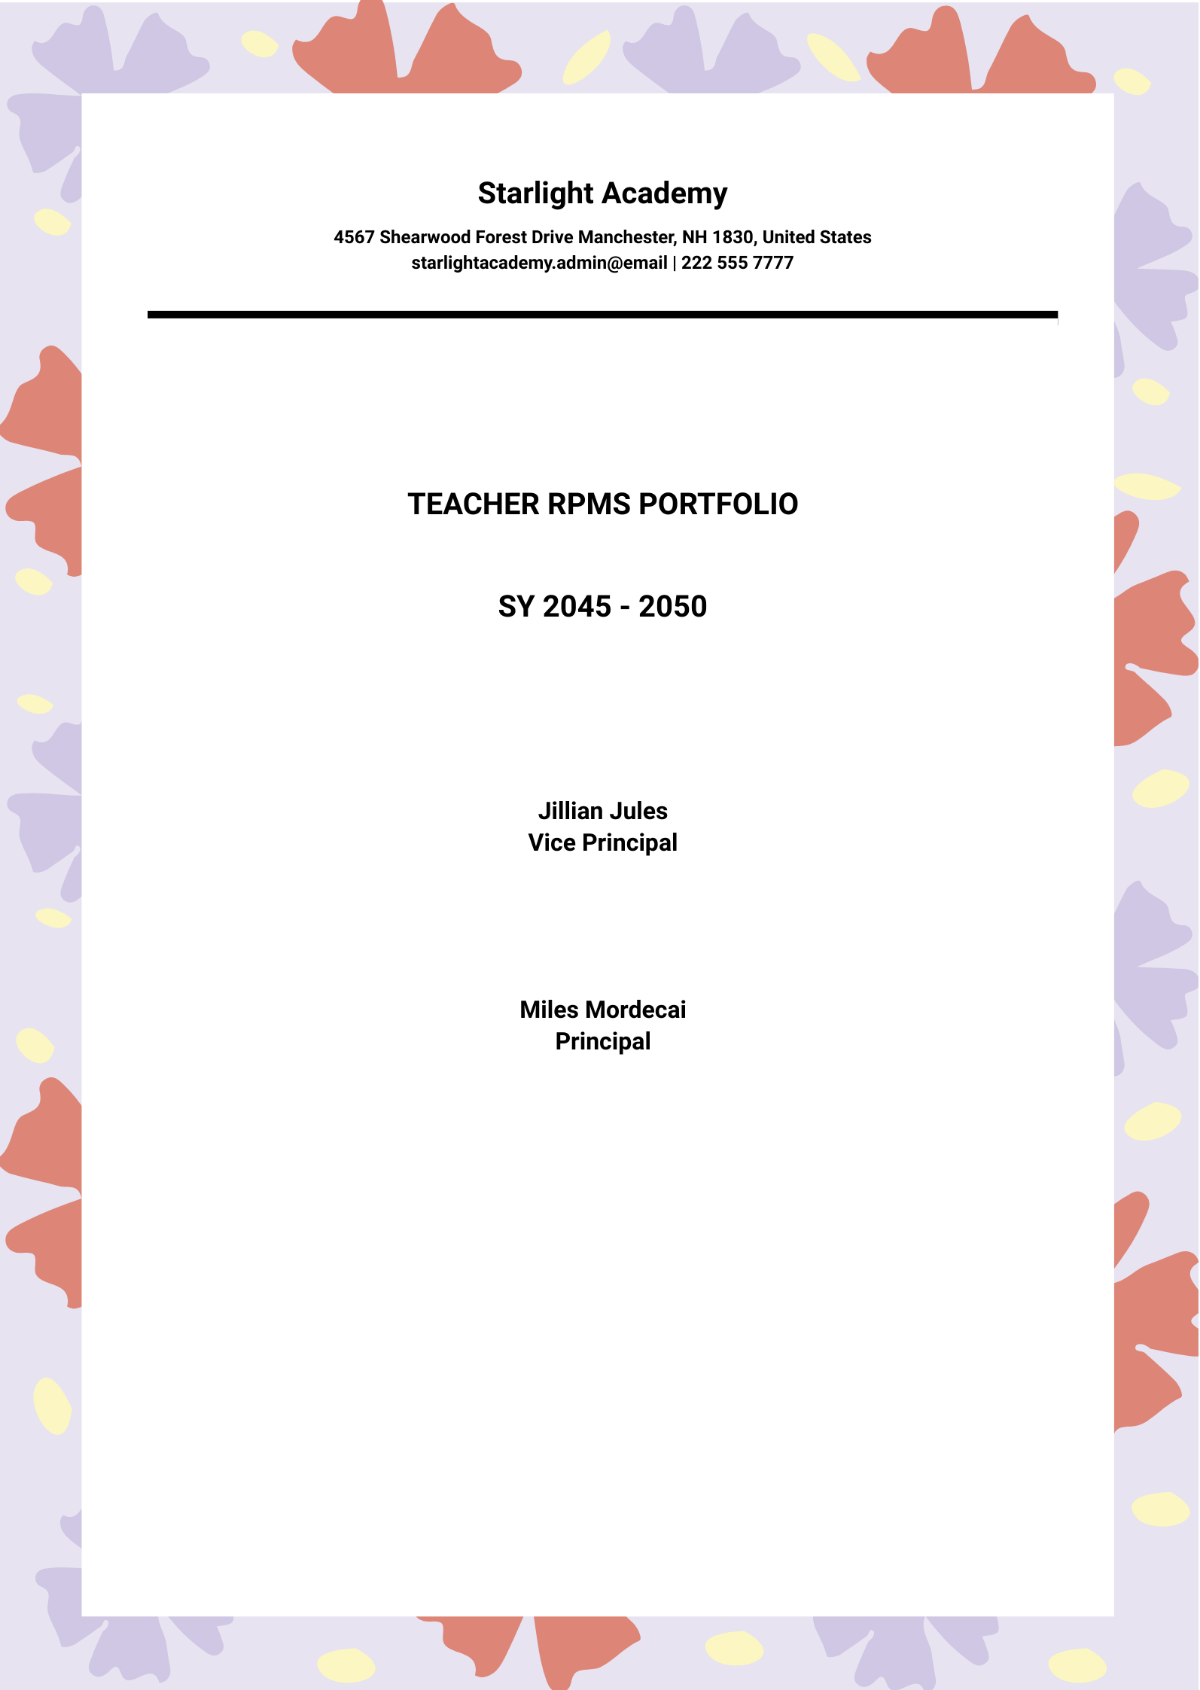 Teacher RPMS Portfolio Template